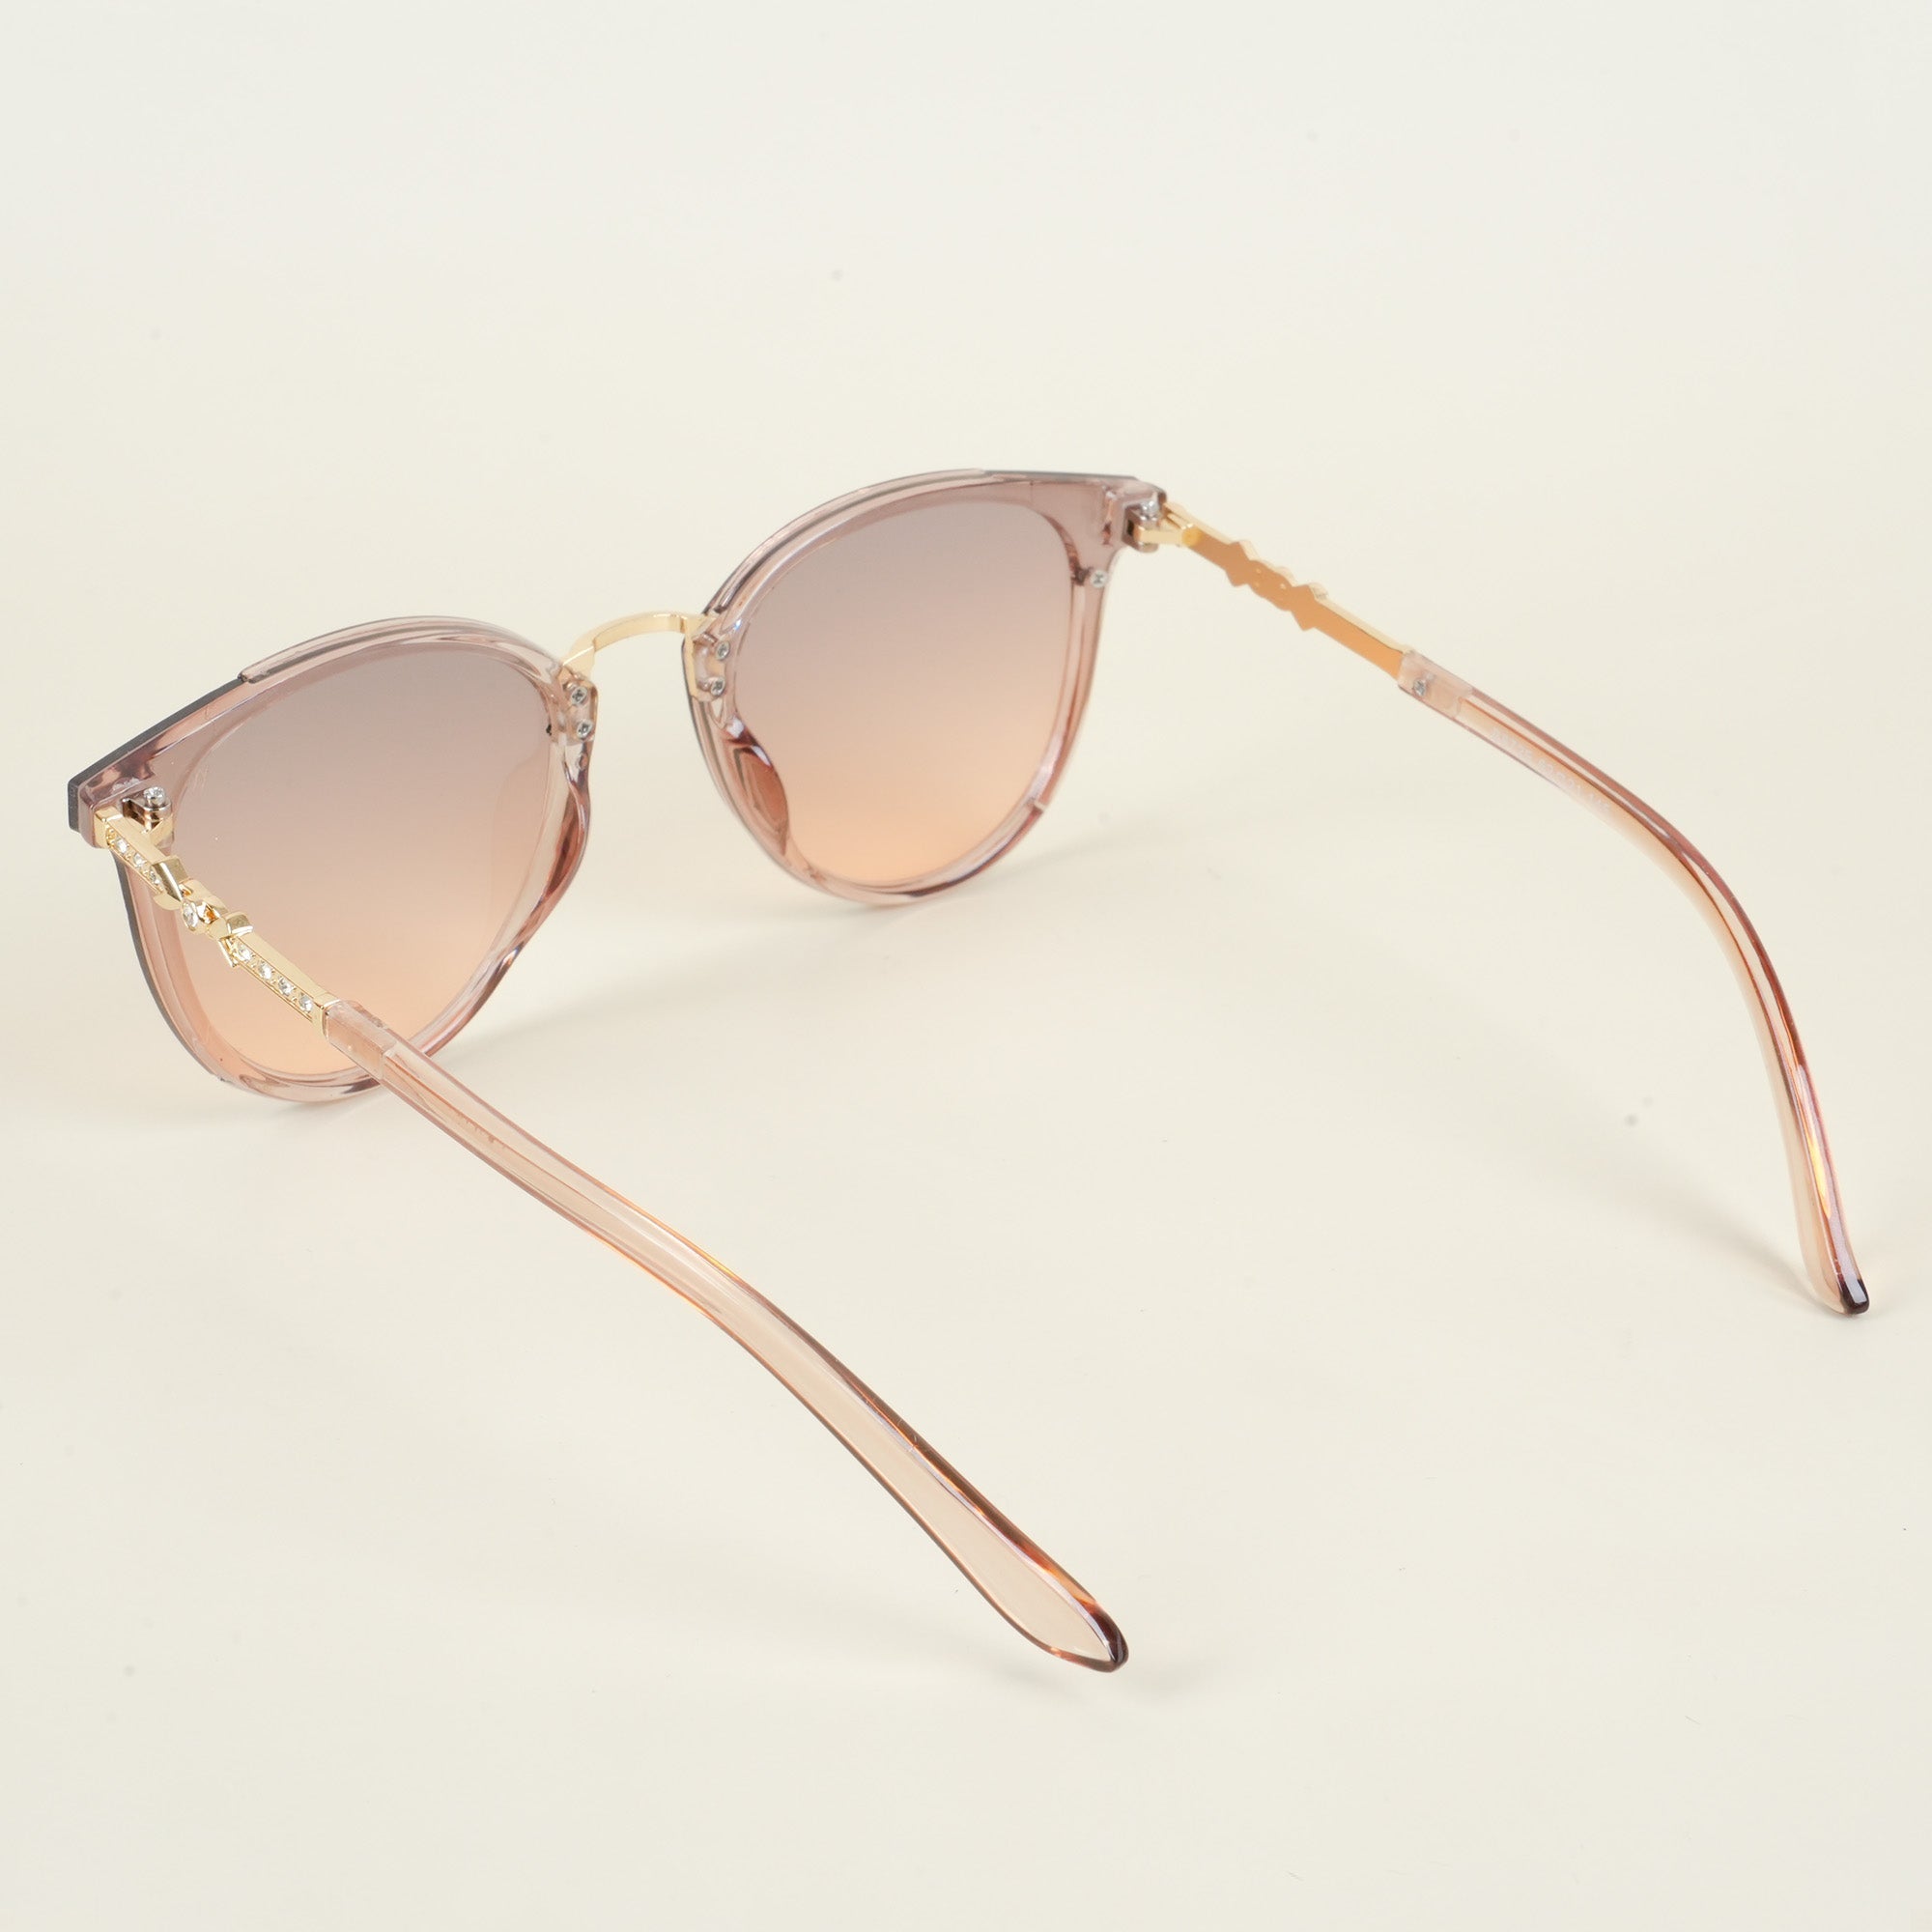 Voyage Cateye Sunglasses for Women (Pink & Grey Lens | Light Pink & Golden Frame - MG3186)